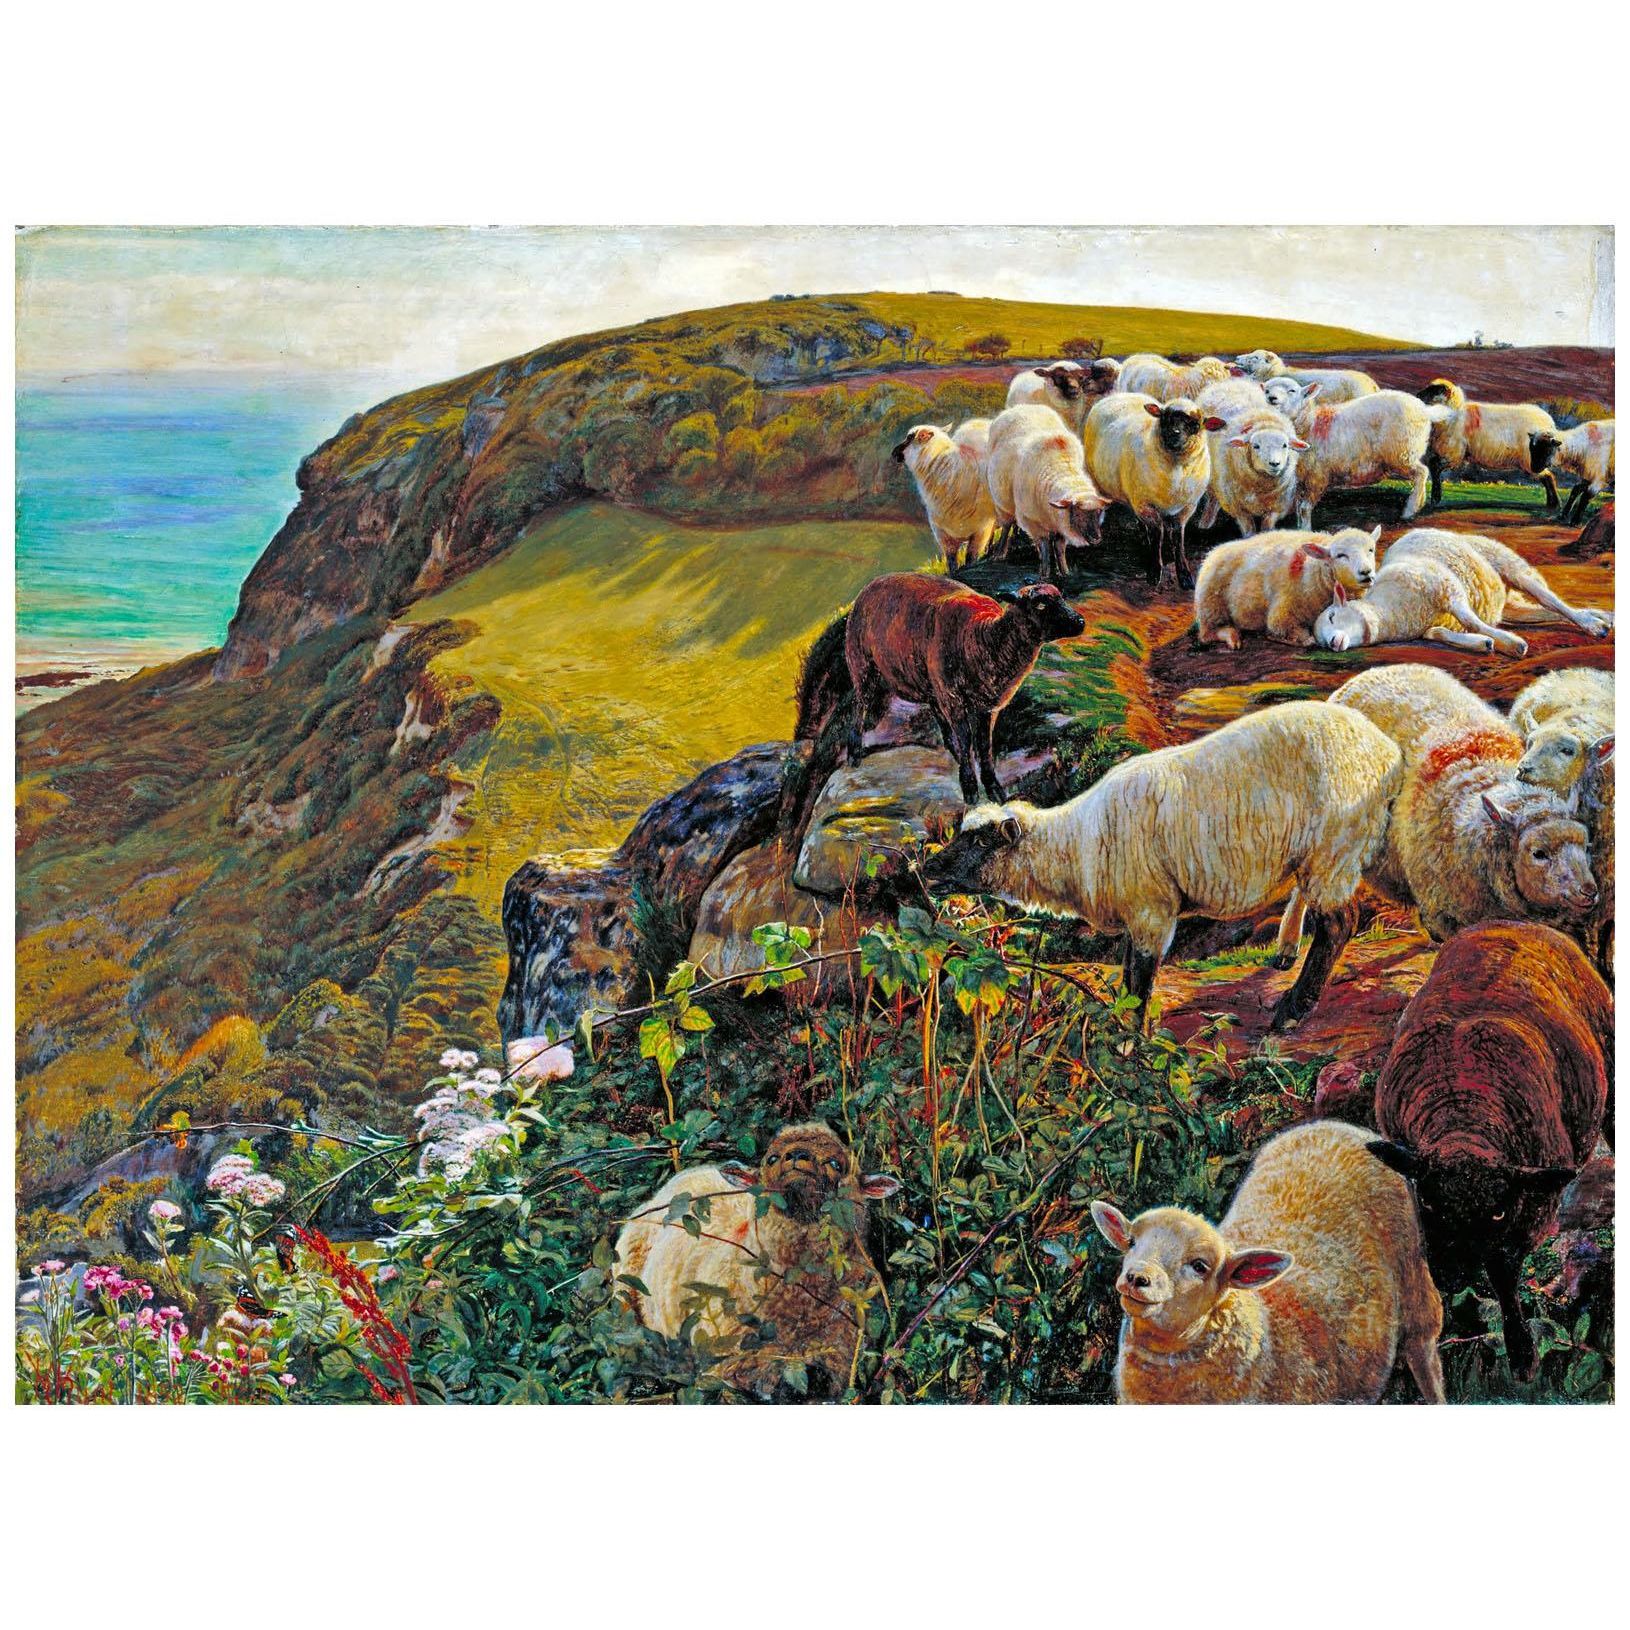 William Hunt. Our English Coasts / Strayed Sheep. 1852. Tate Britain